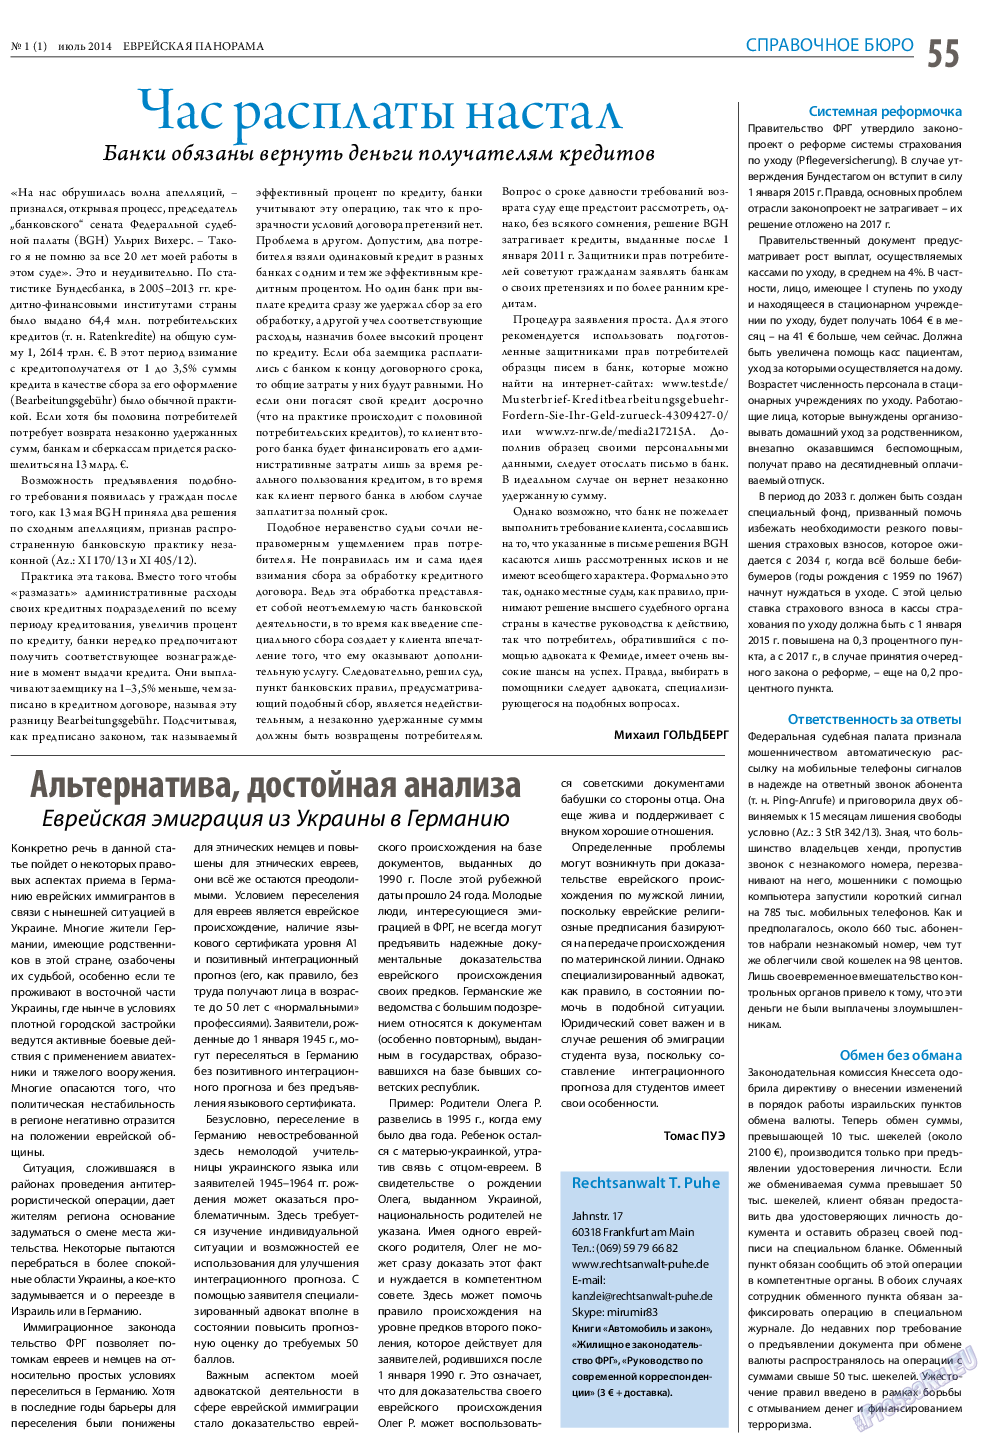 Еврейская панорама, газета. 2014 №1 стр.55